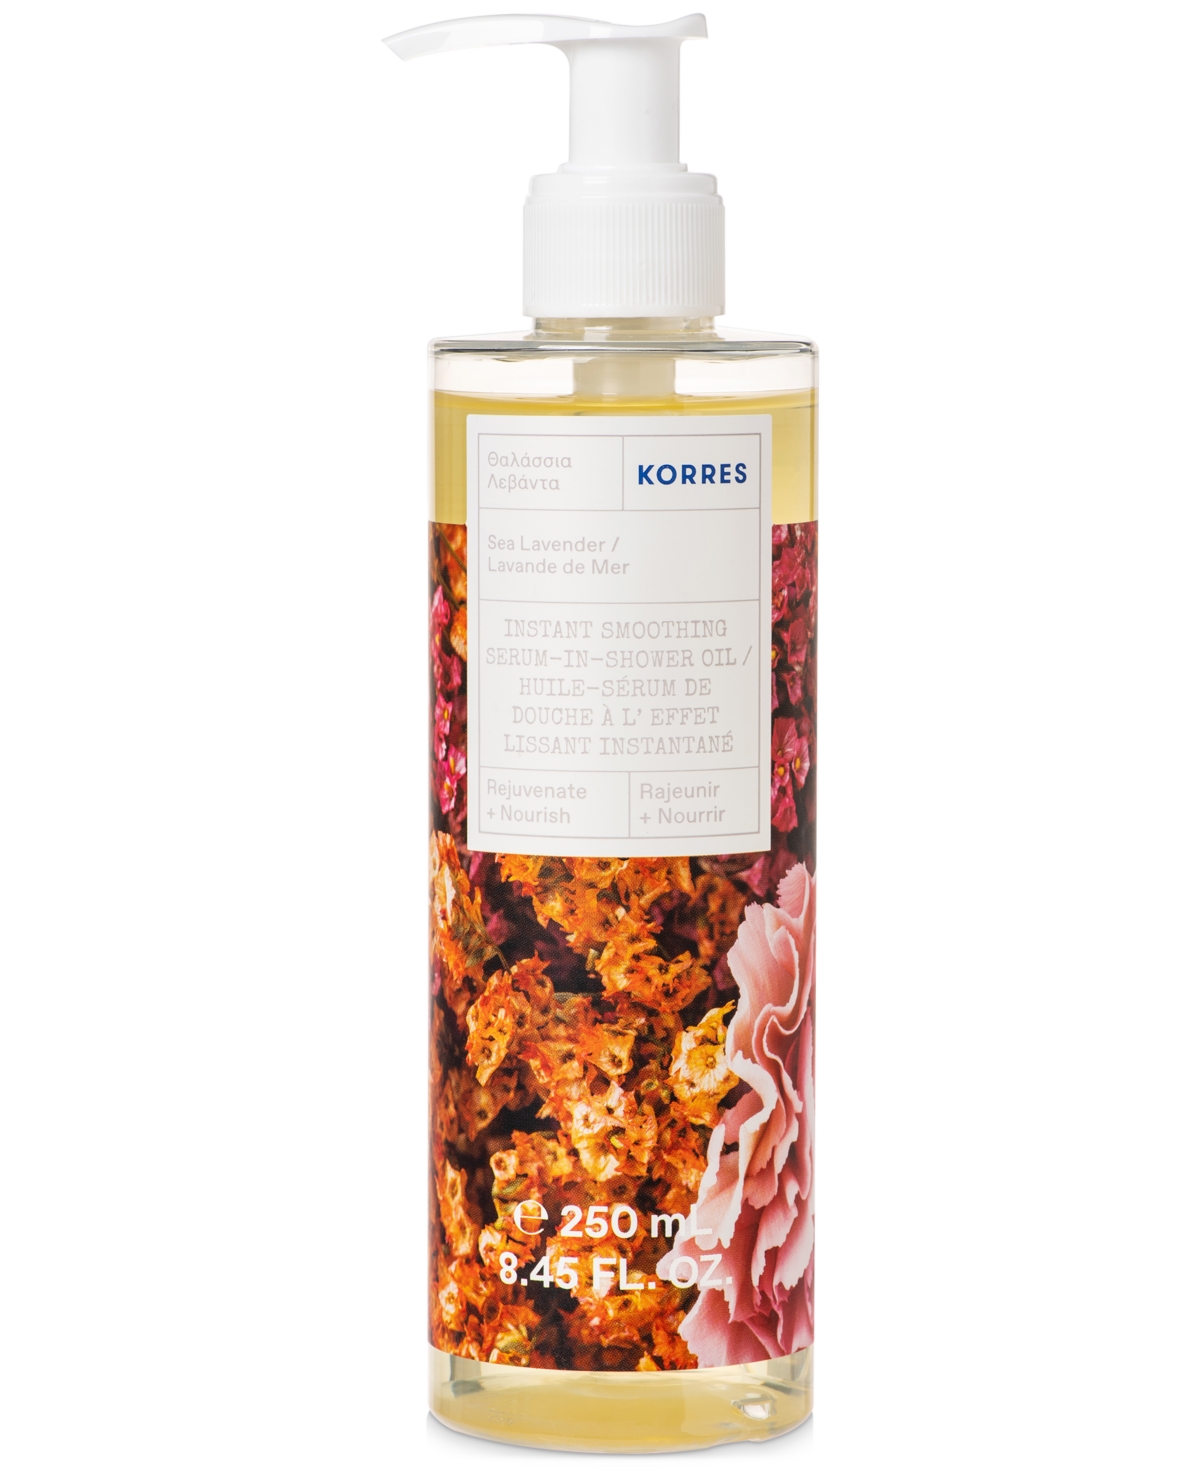 Korres Sea Lavender Instant Smoothing Serum-In-Shower Oil